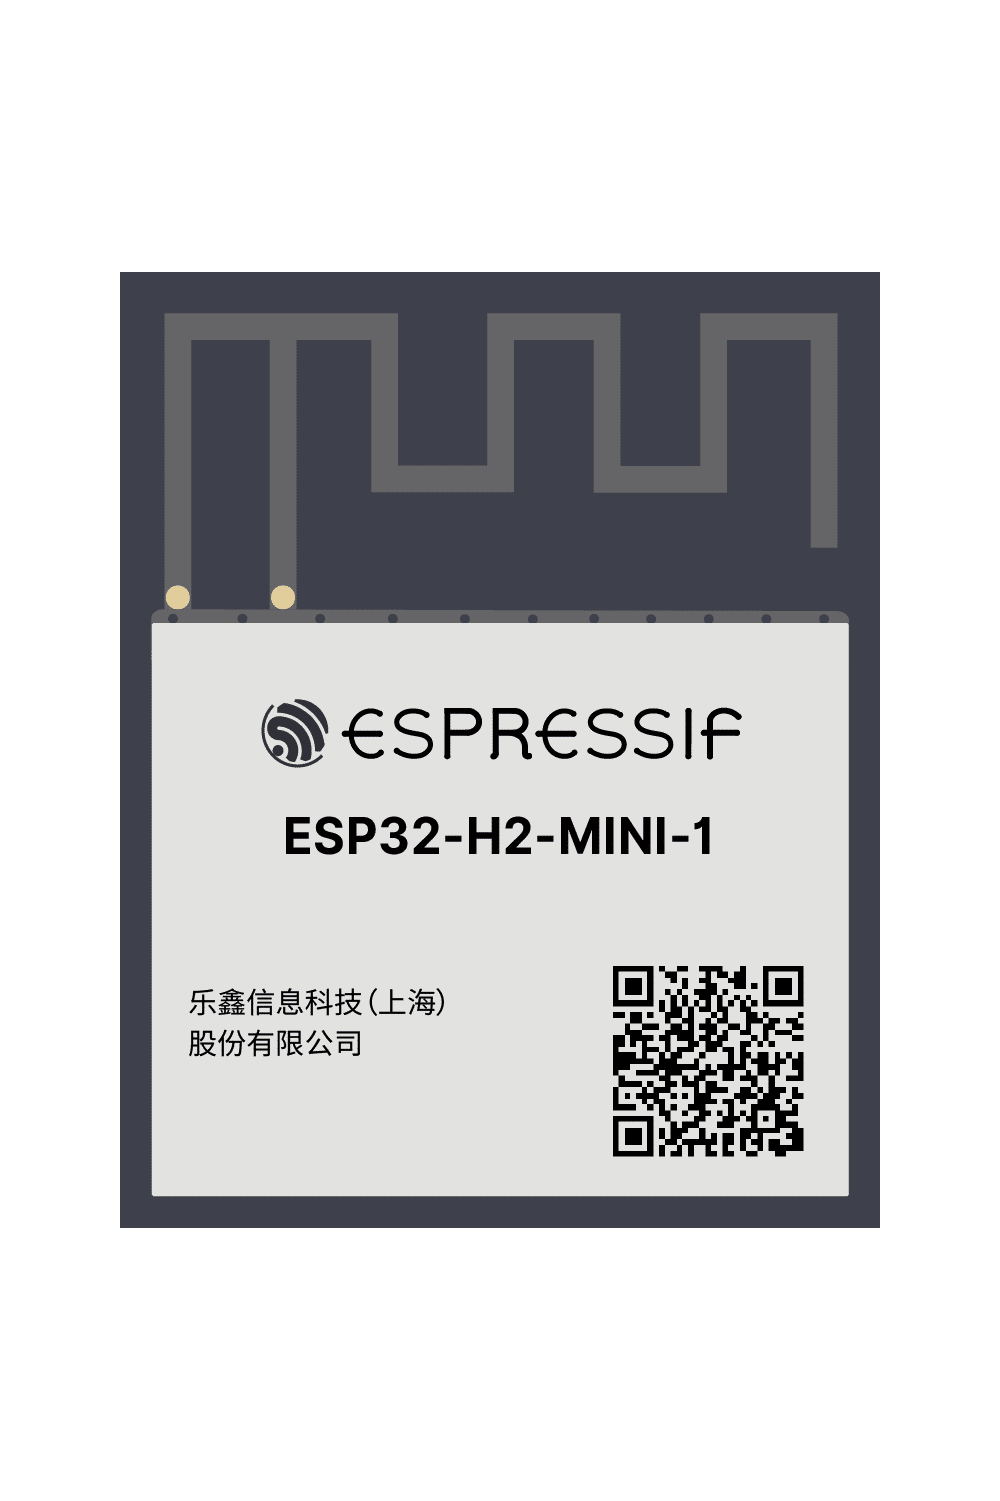 Espressif ESP32-­H2-­MINI-­1-N1 - moduł BLE i LR-WPAN z 1 MB flash